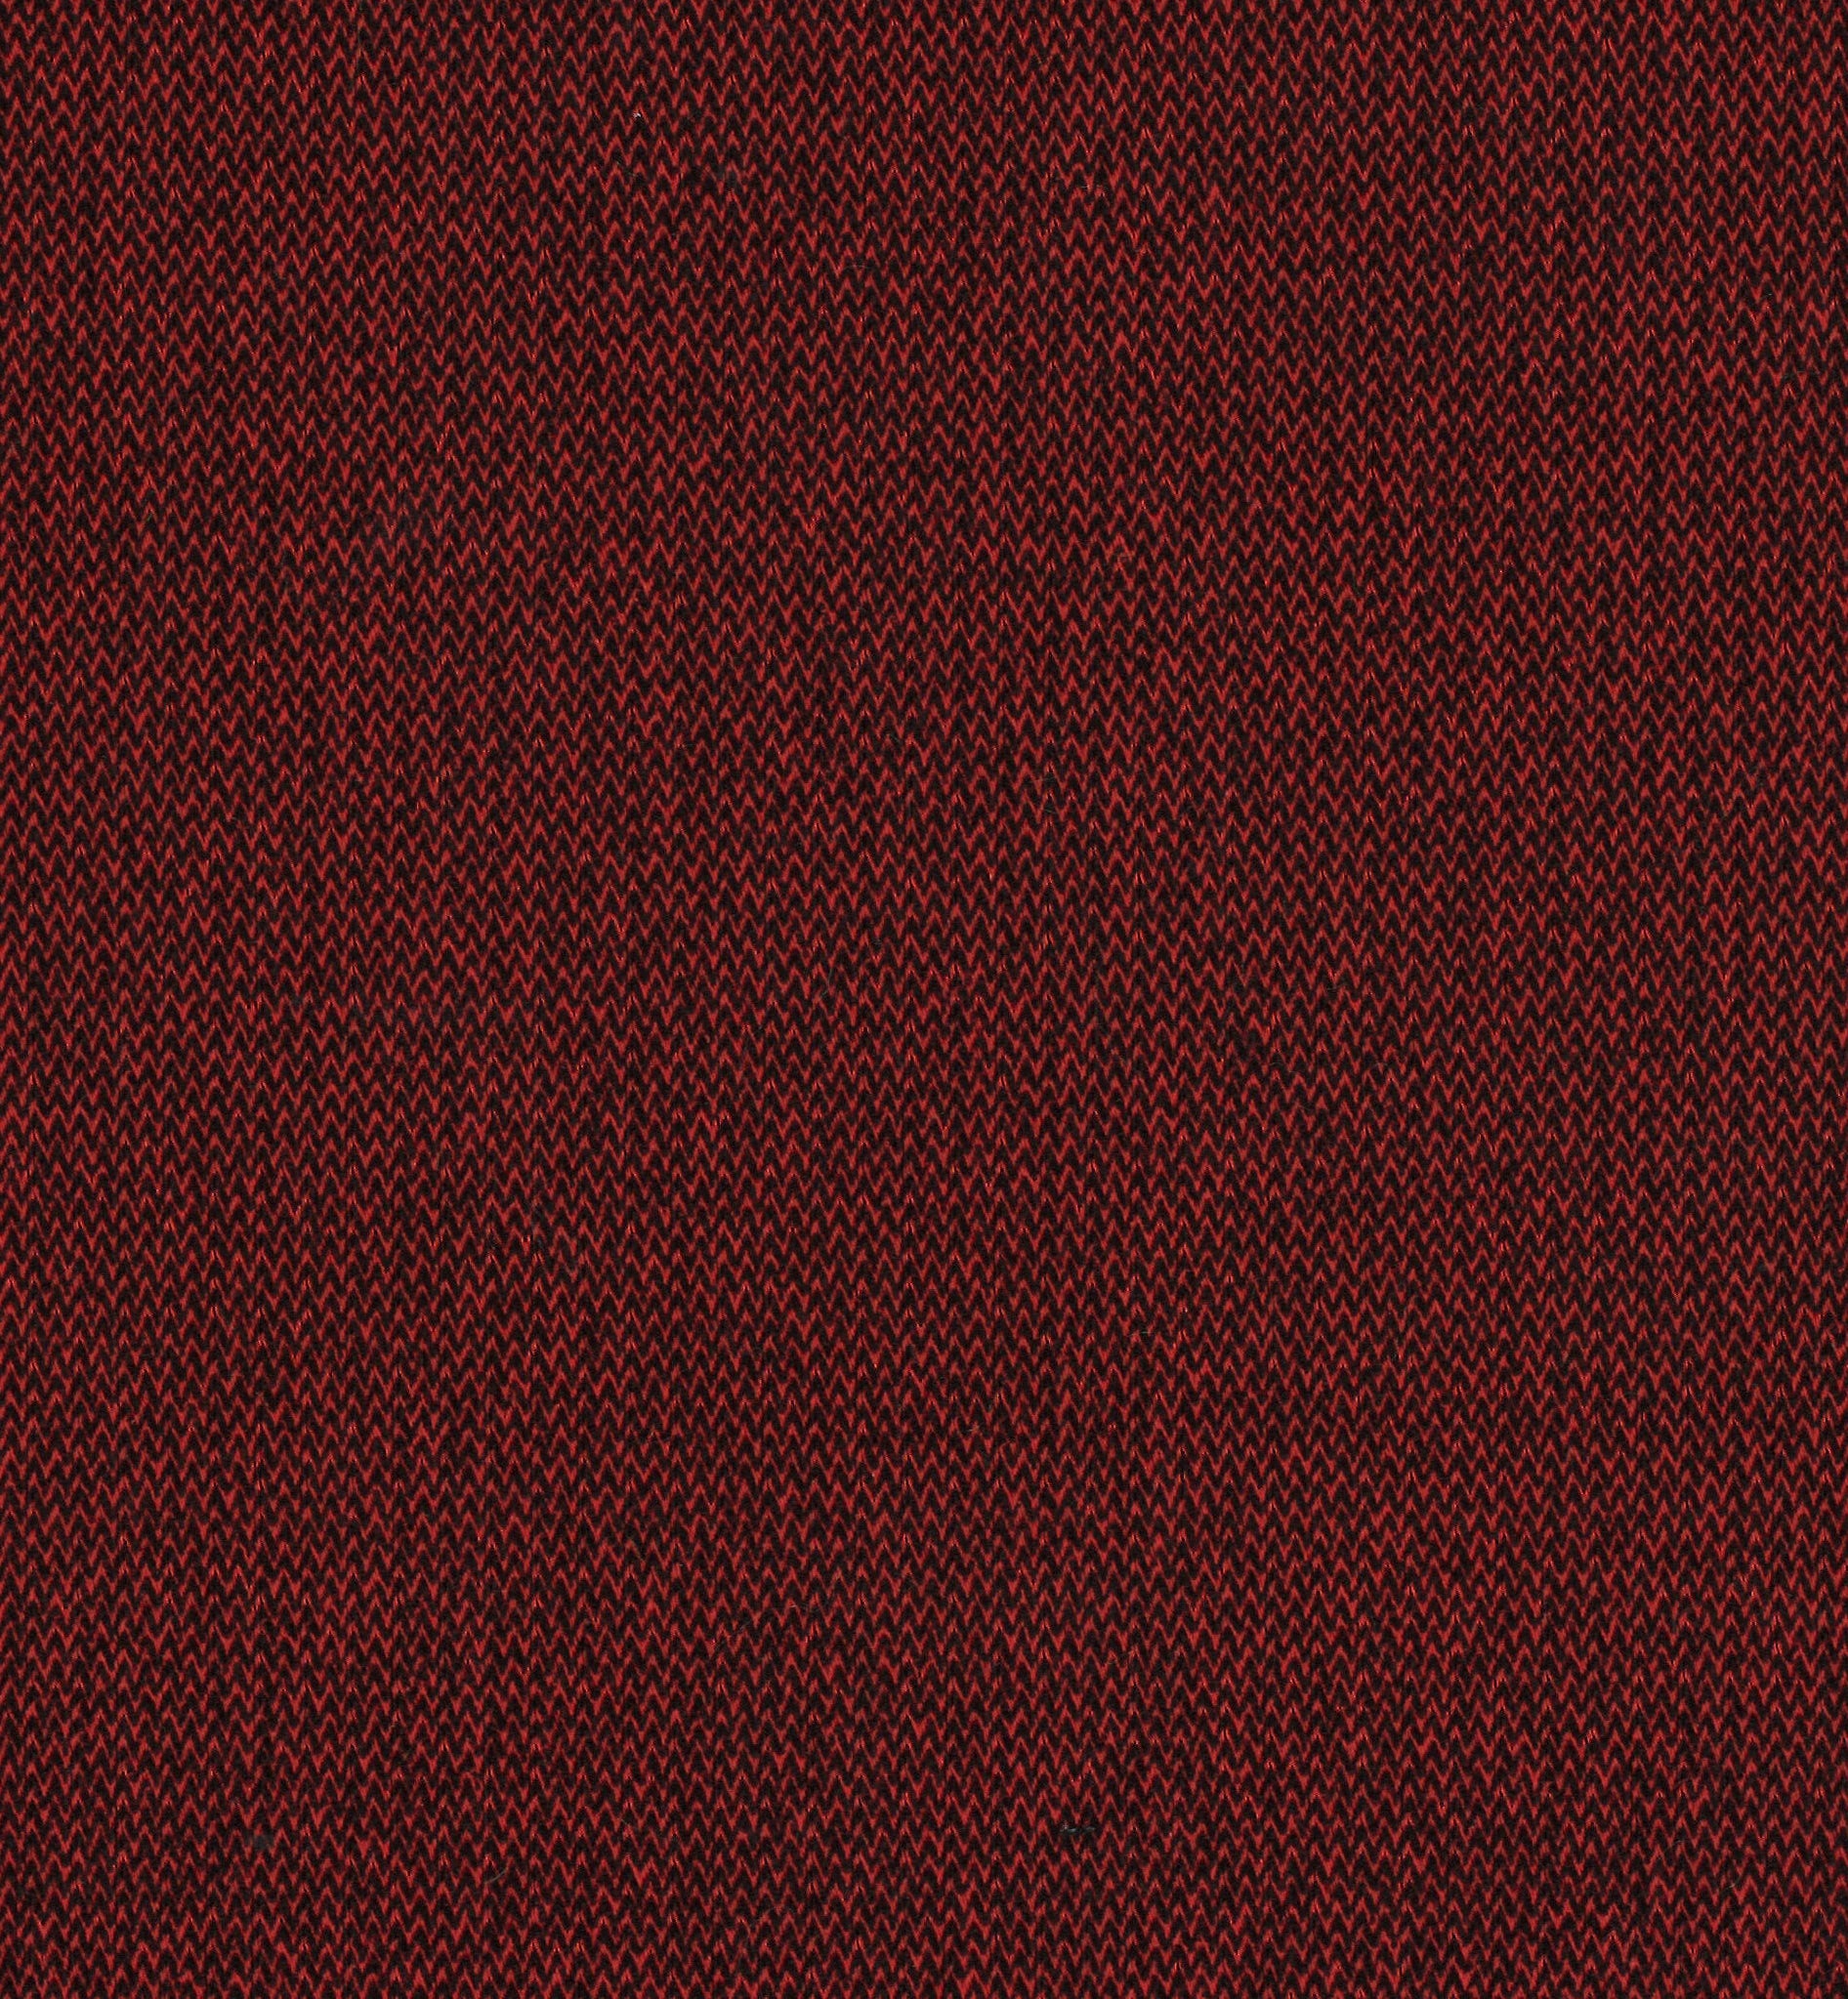 33002-01 Red Woven ZigZag Jacquard Blend 295g/yd 55" jacqaurd polyester red spandex woven zigzag Jacquard, Solid Color - knit fabric - woven fabric - fabric company - fabric wholesale - fabric b2b - fabric factory - high quality fabric - hong kong fabric - fabric hk - acetate fabric - cotton fabric - linen fabric - metallic fabric - nylon fabric - polyester fabric - spandex fabric - chun wing hing - cwh hk - fabric worldwide ship - 針織布 - 梳織布 - 布料公司- 布料批發 - 香港布料 - 秦榮興